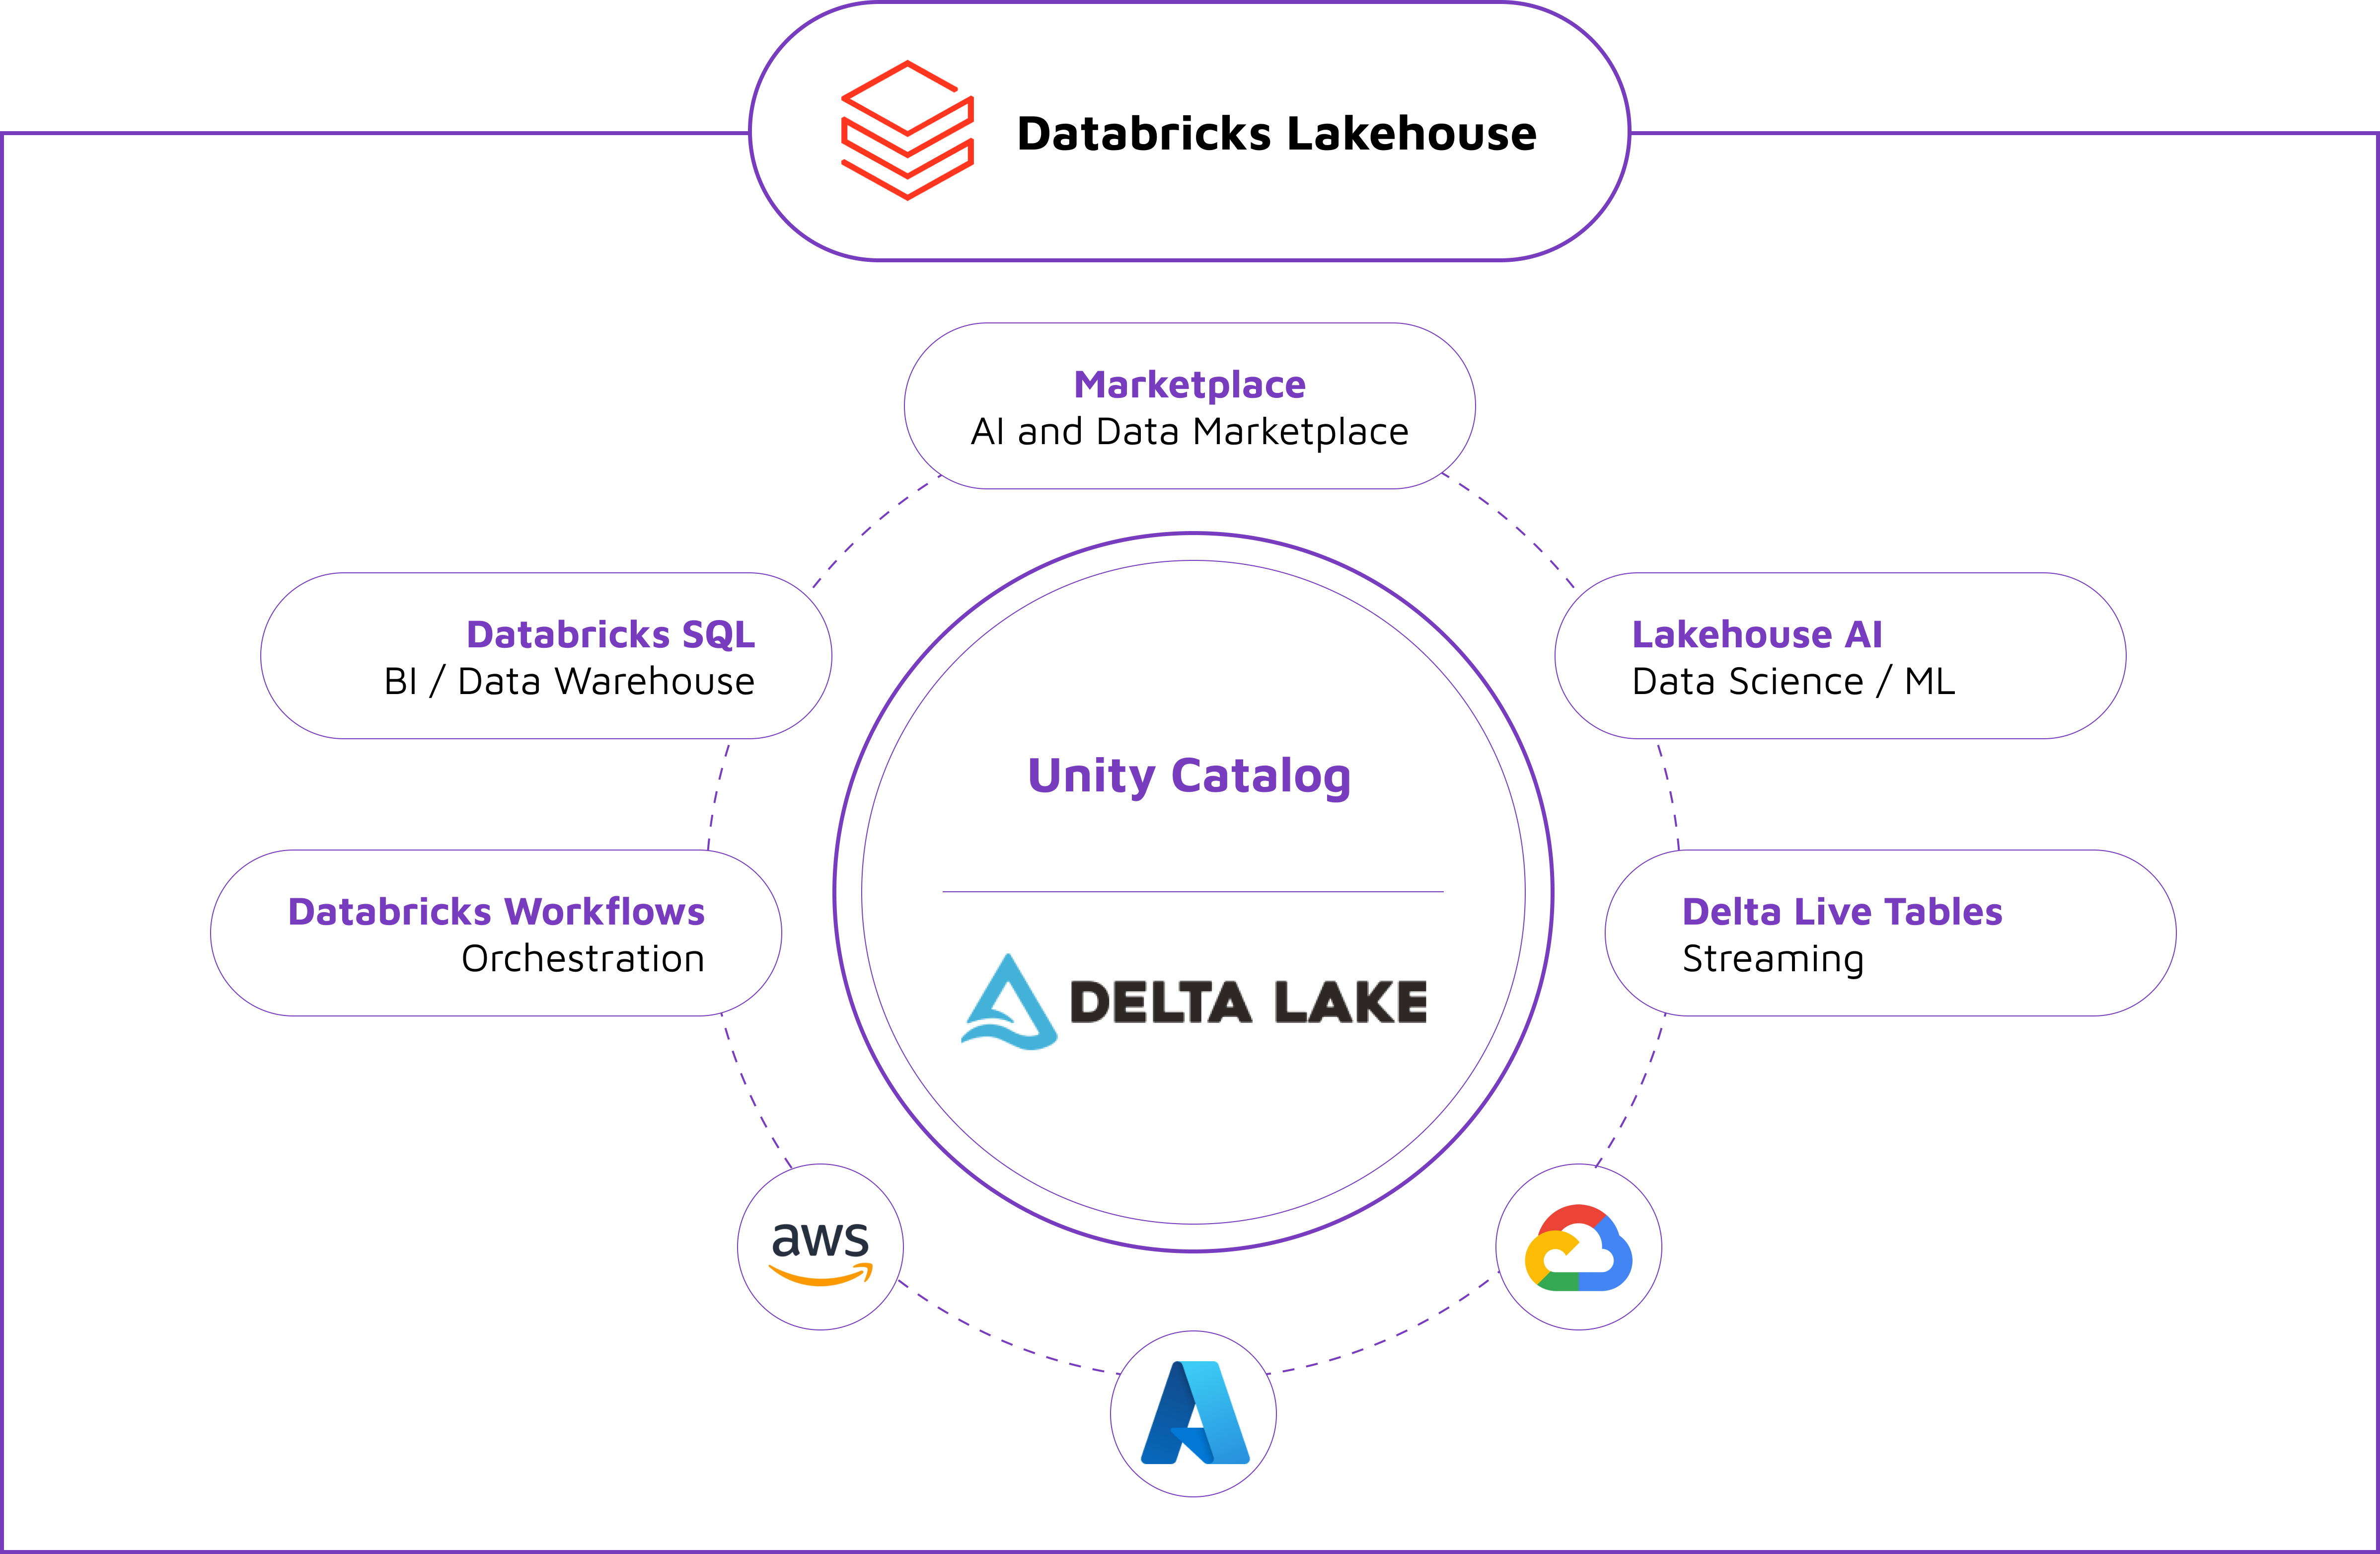 Databricks Lakehouse